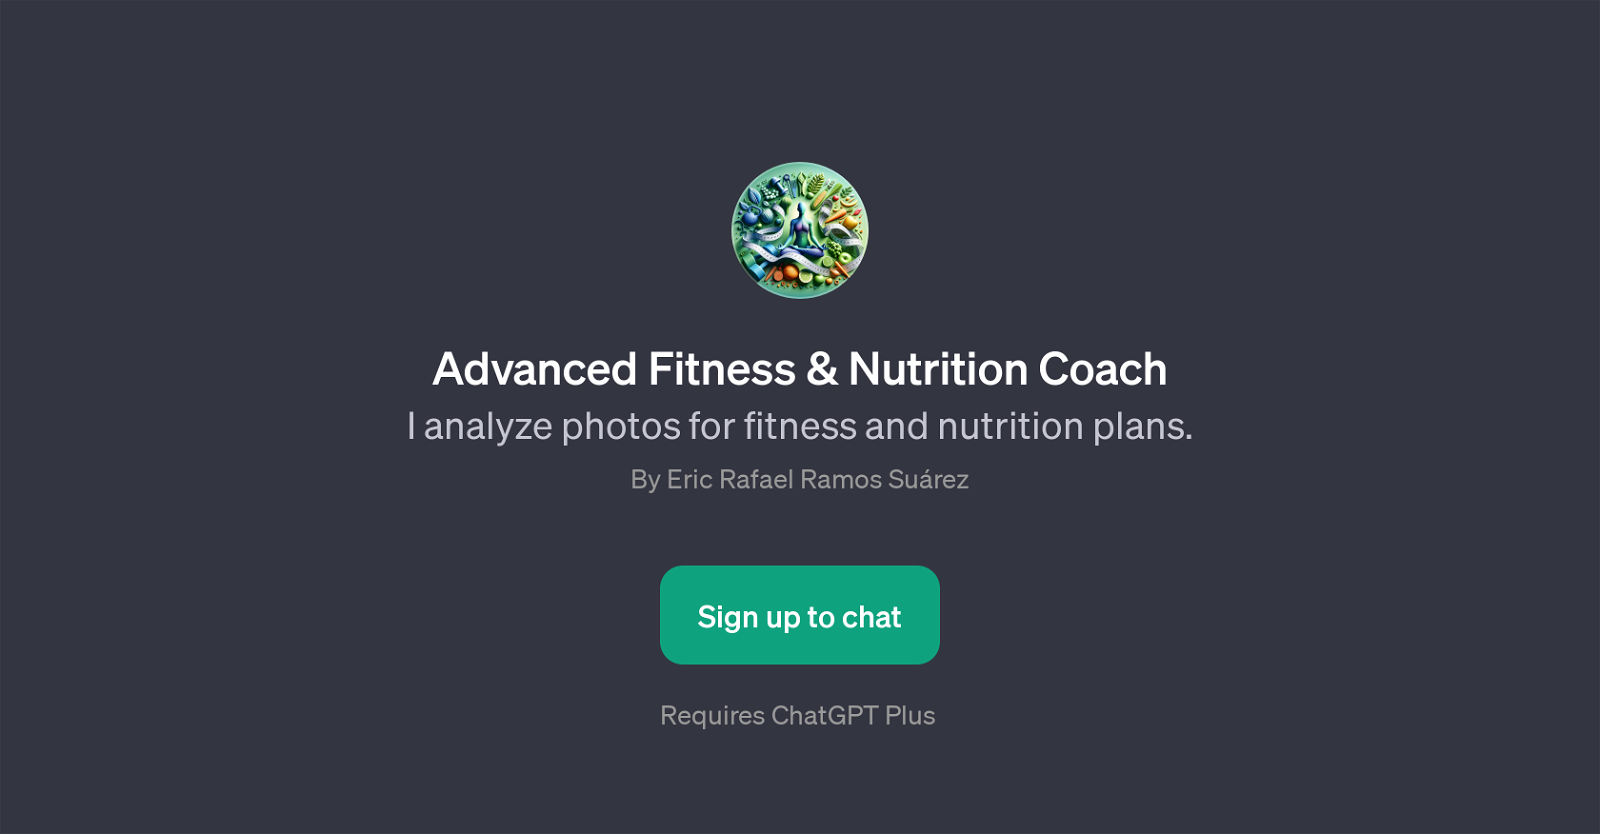 Advanced Fitness & Nutrition Coach website